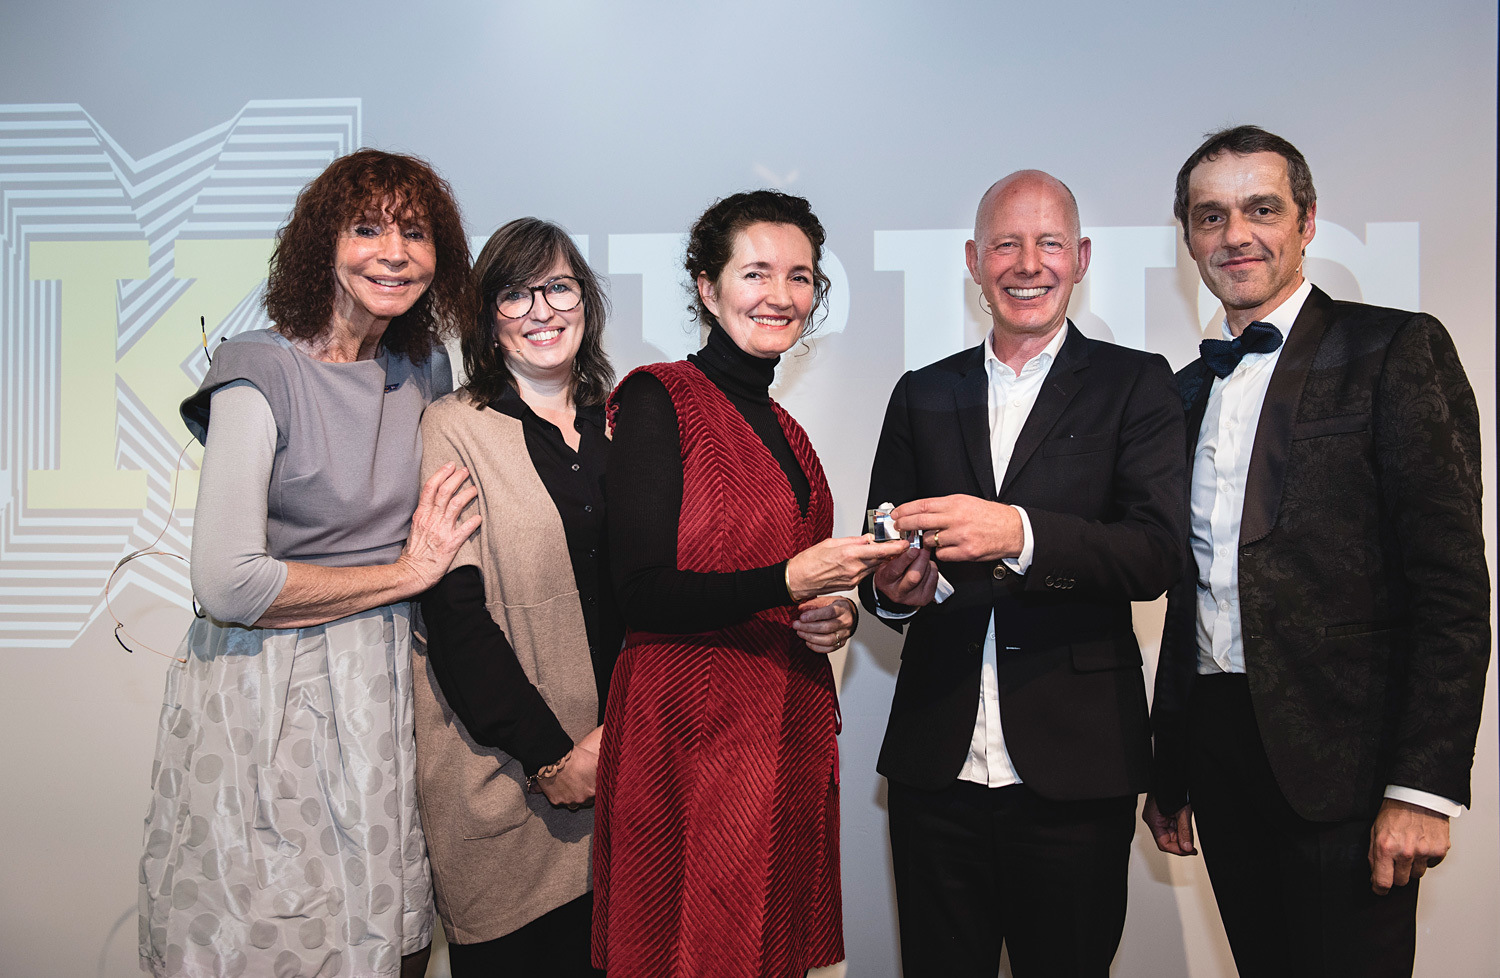 Ben van Berkel & Caroline Bos receive the BNA Kubus Award